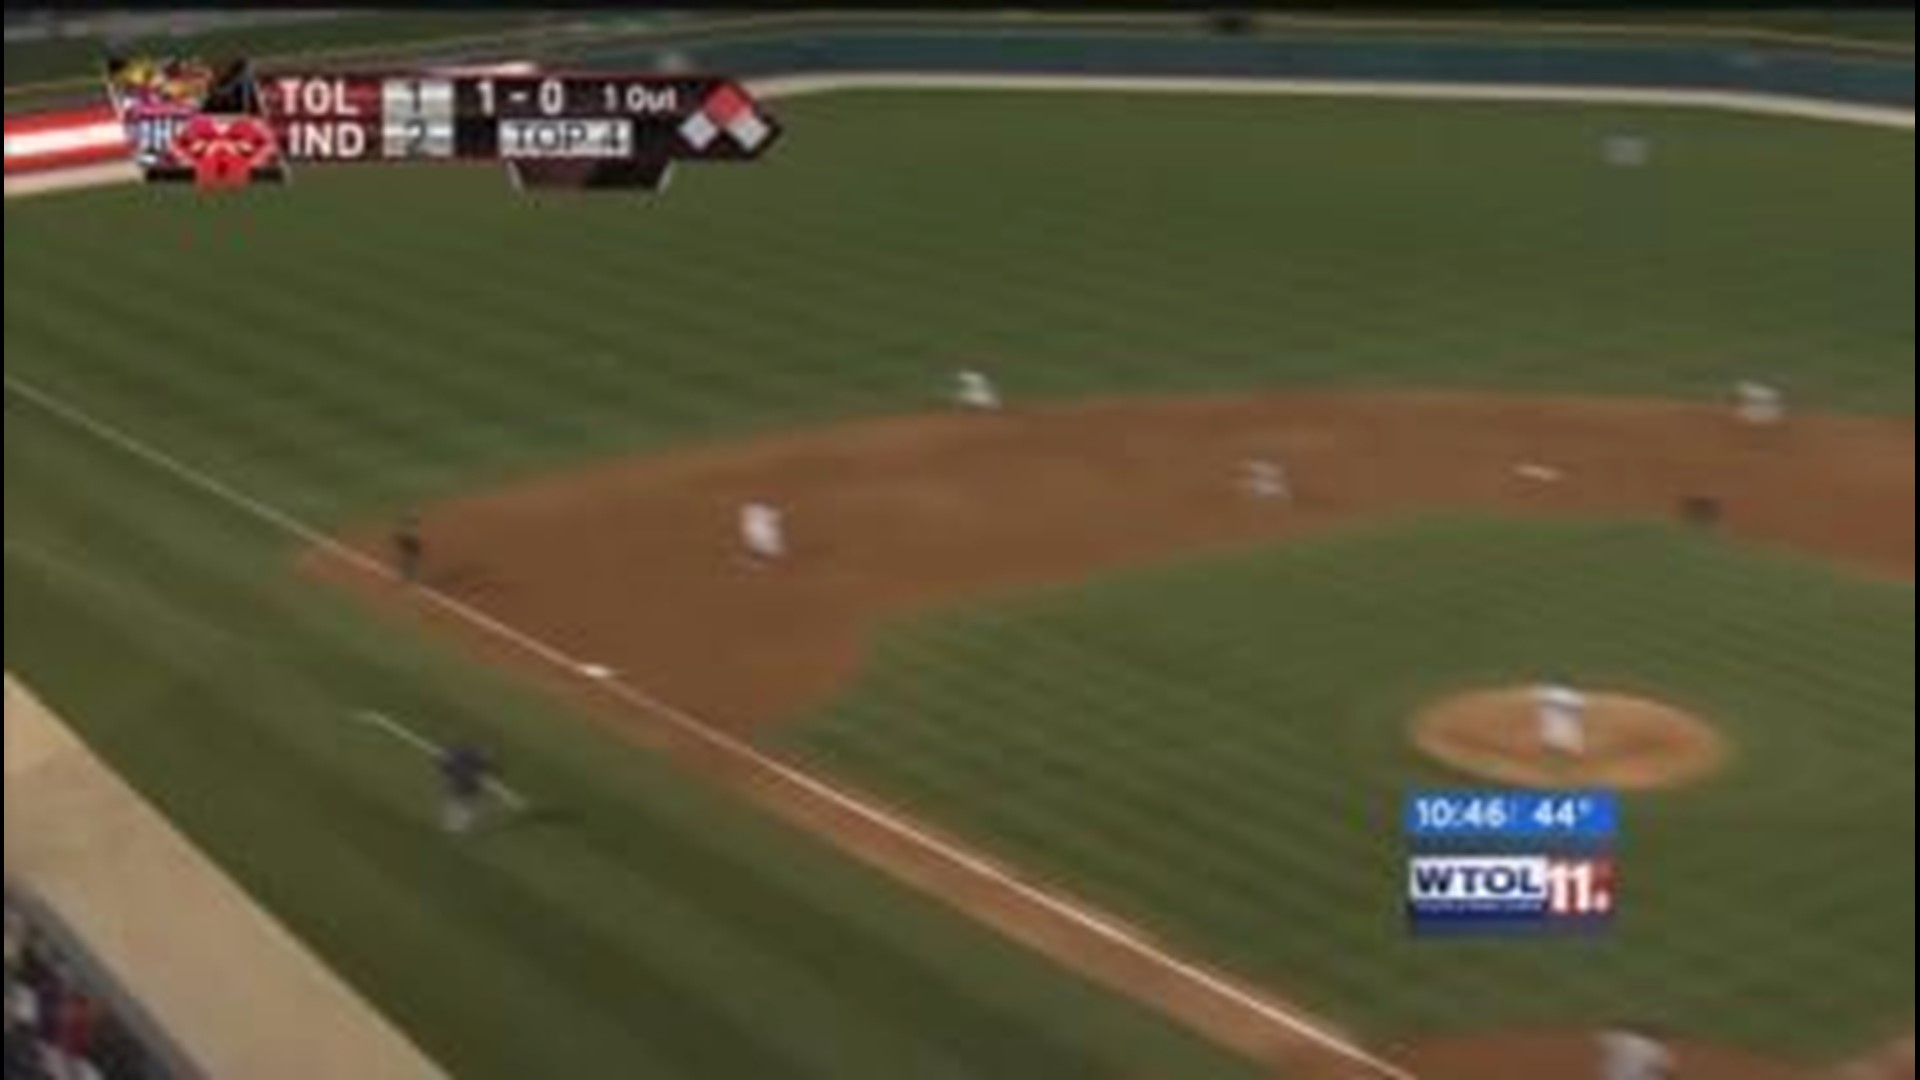 International League baseball: Toledo vs. Indianapolis